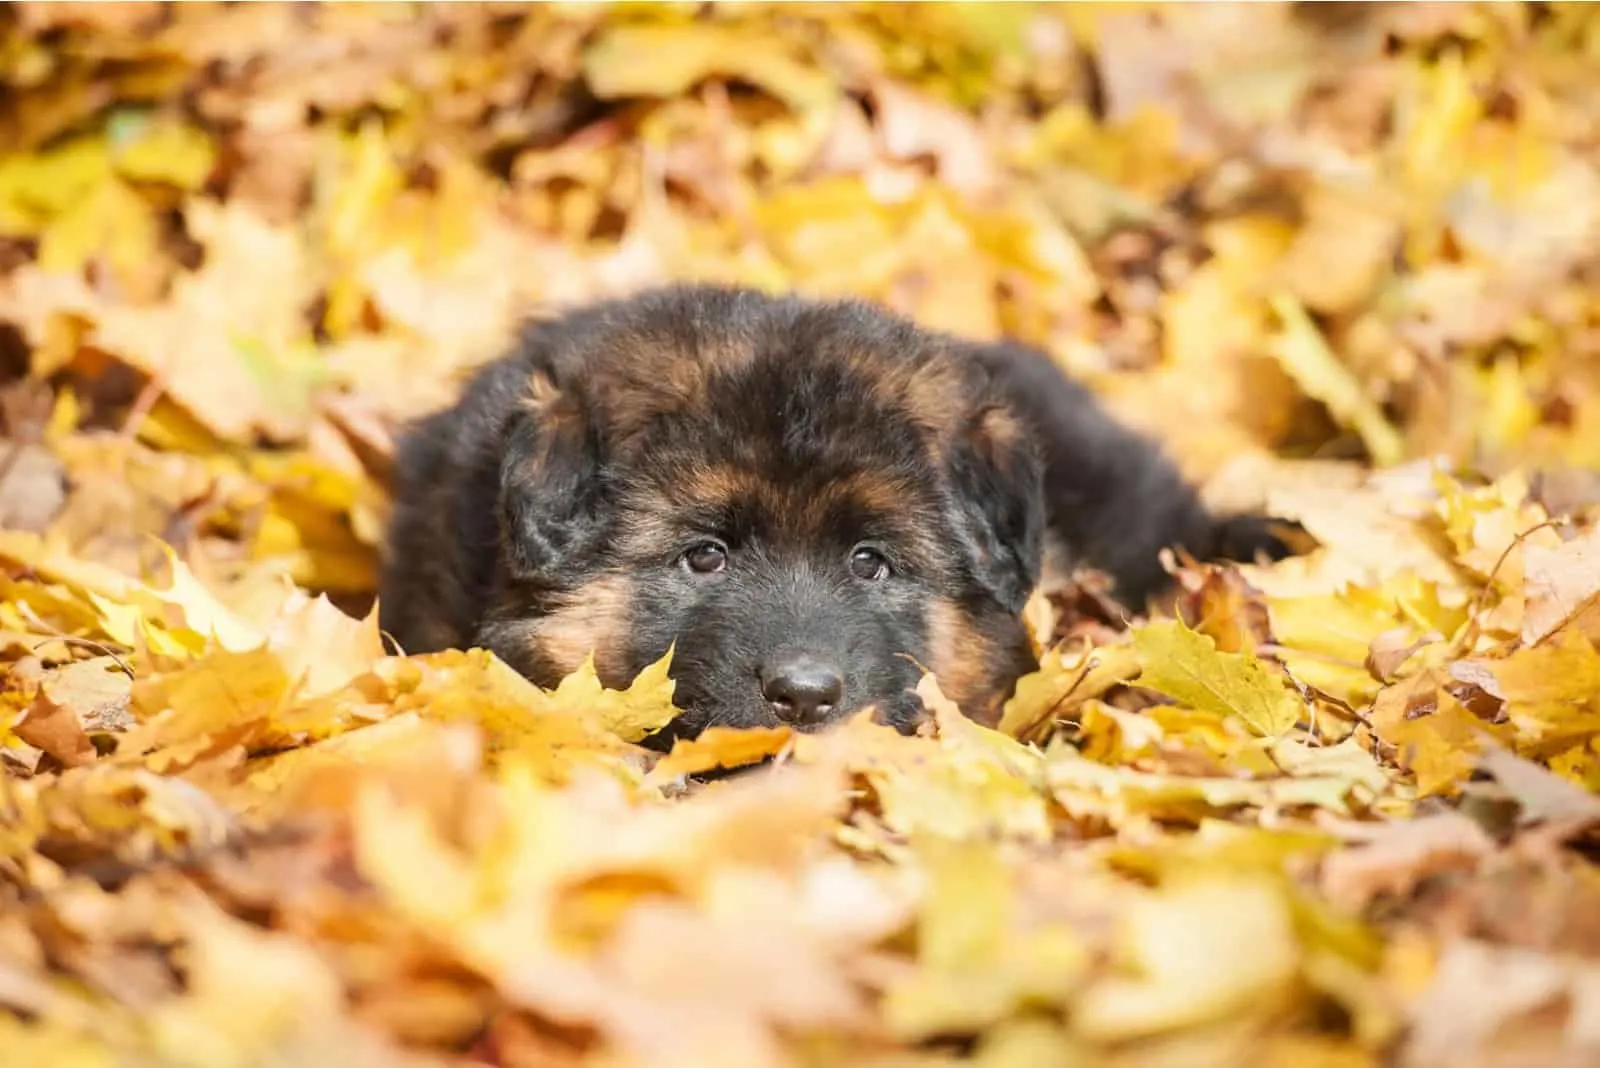 German shepherd puppy lying in the falling leaves in autumn